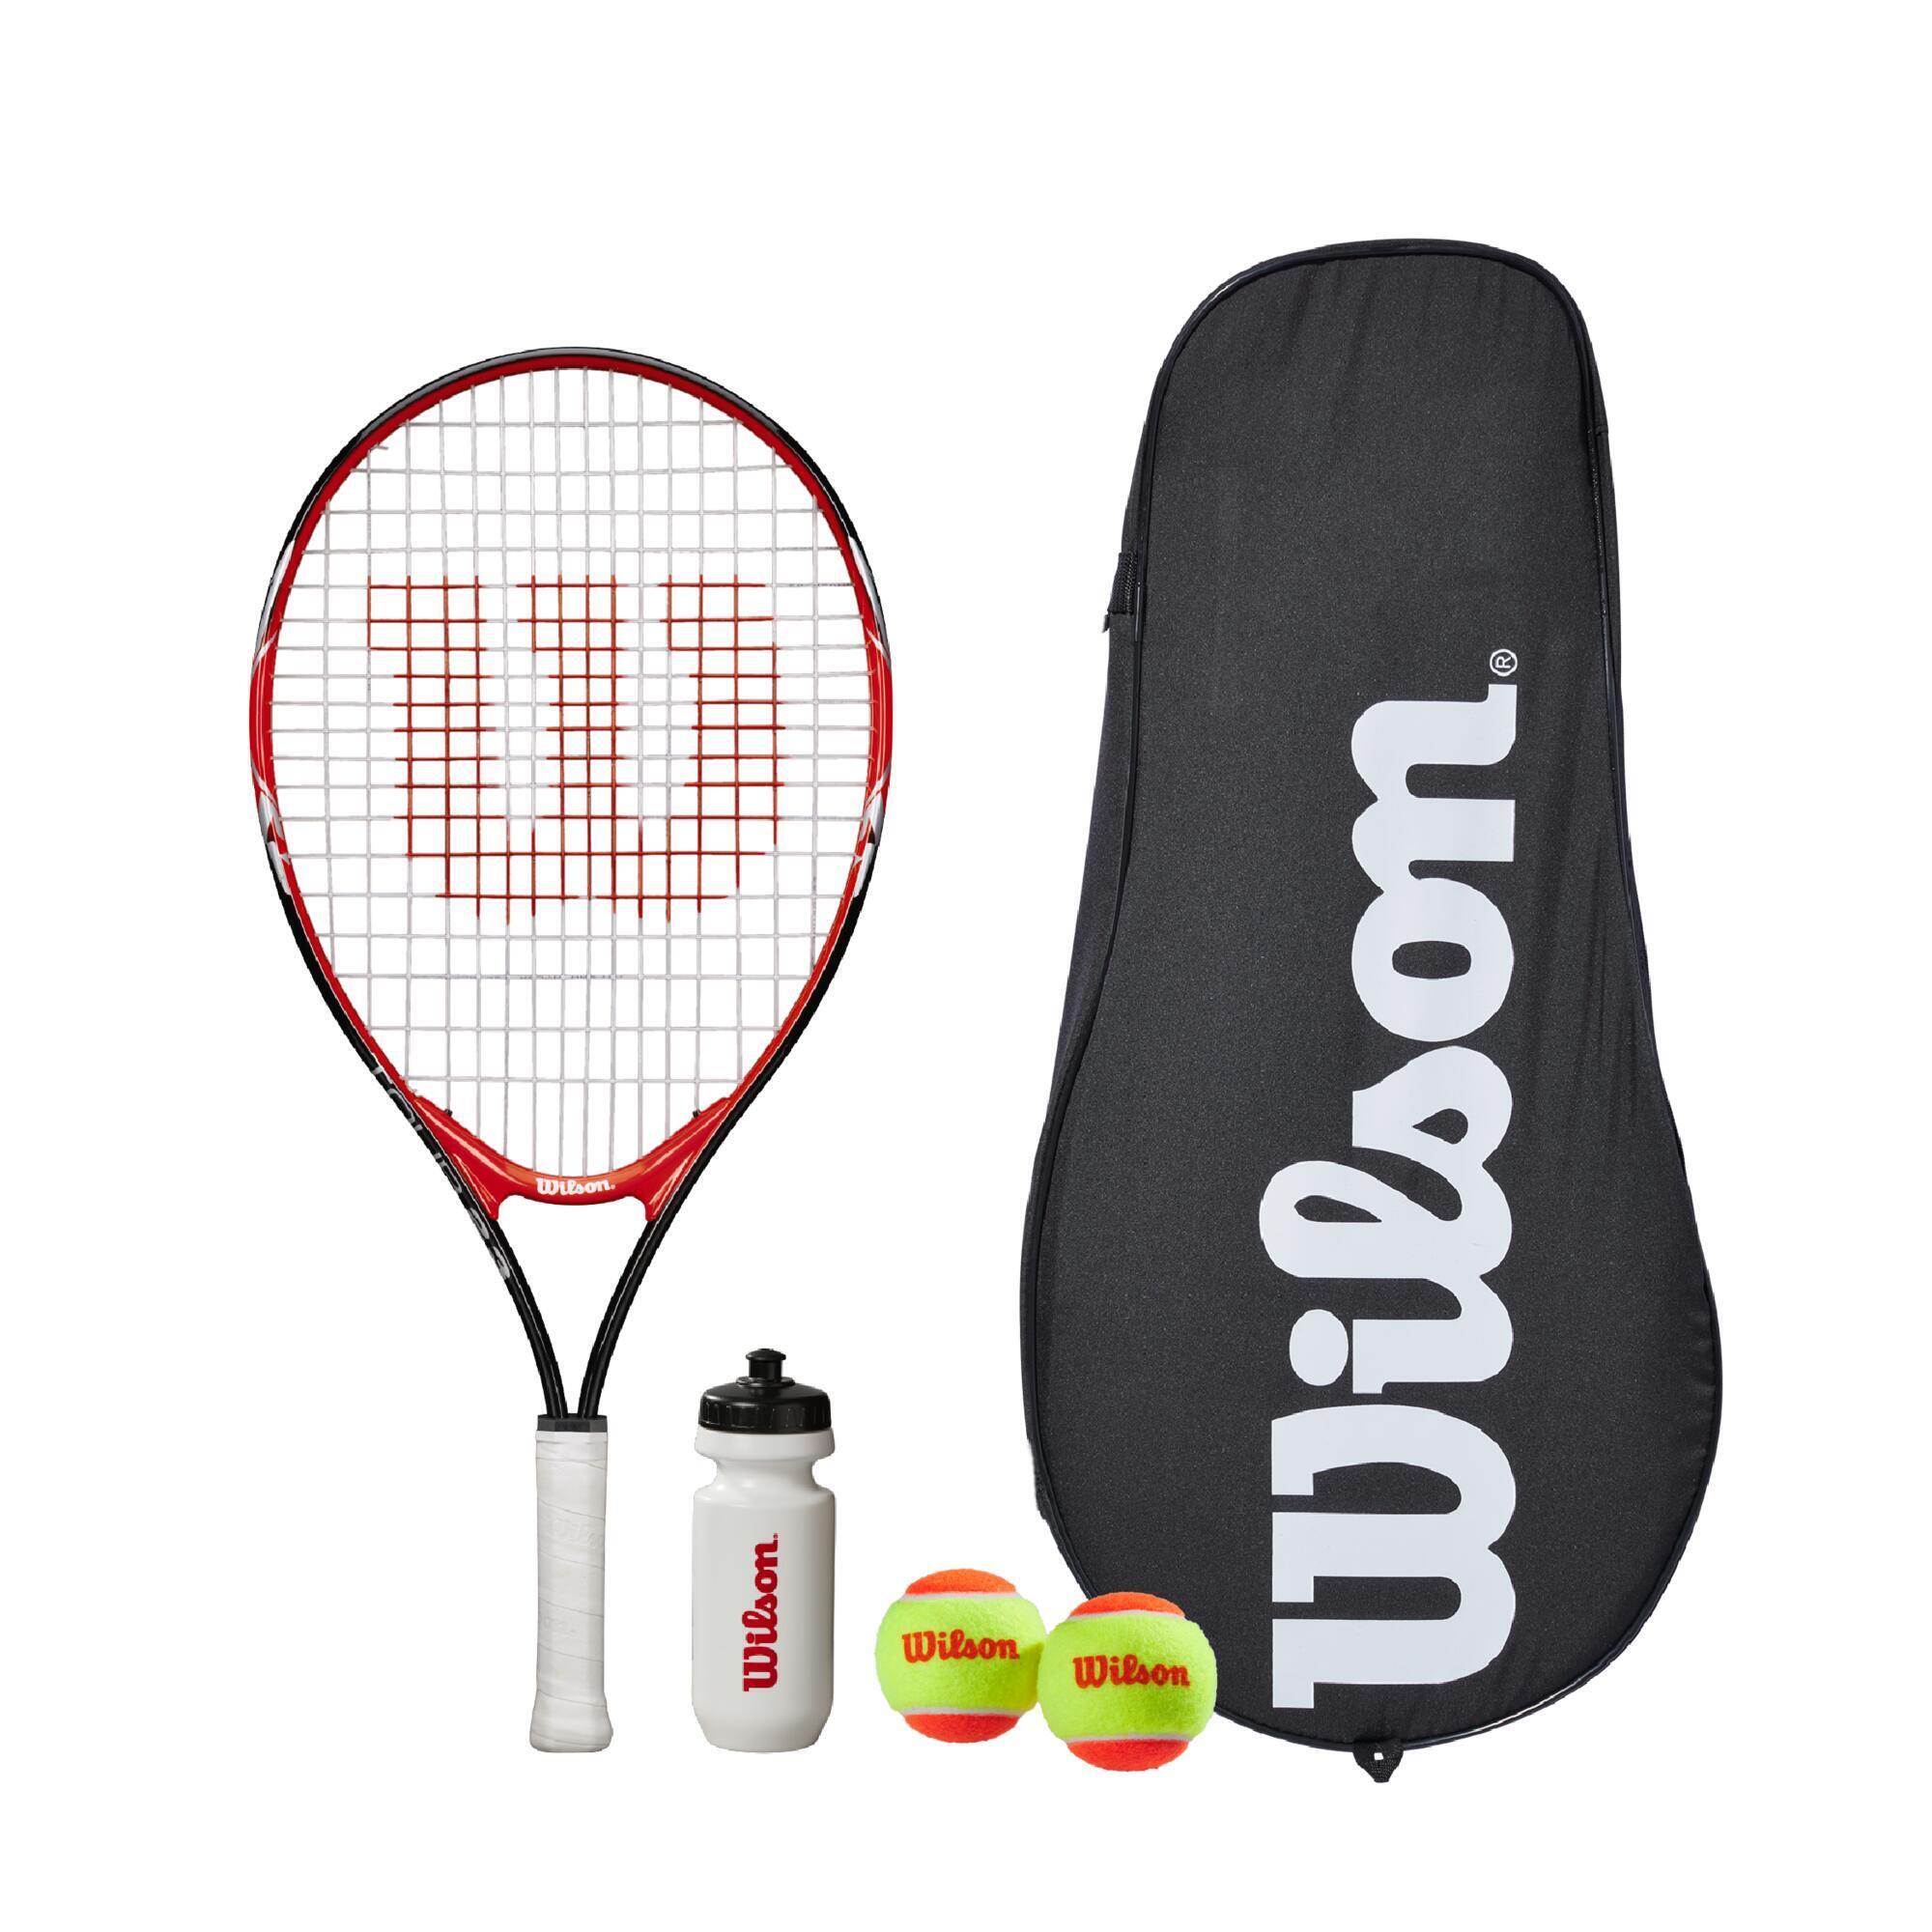 Senston 23 inch Tennis Racket for Kids 2-Pack Boys Girls Tennis Racquets Kids Complete Tennis Set with Balls Pink+Blue 